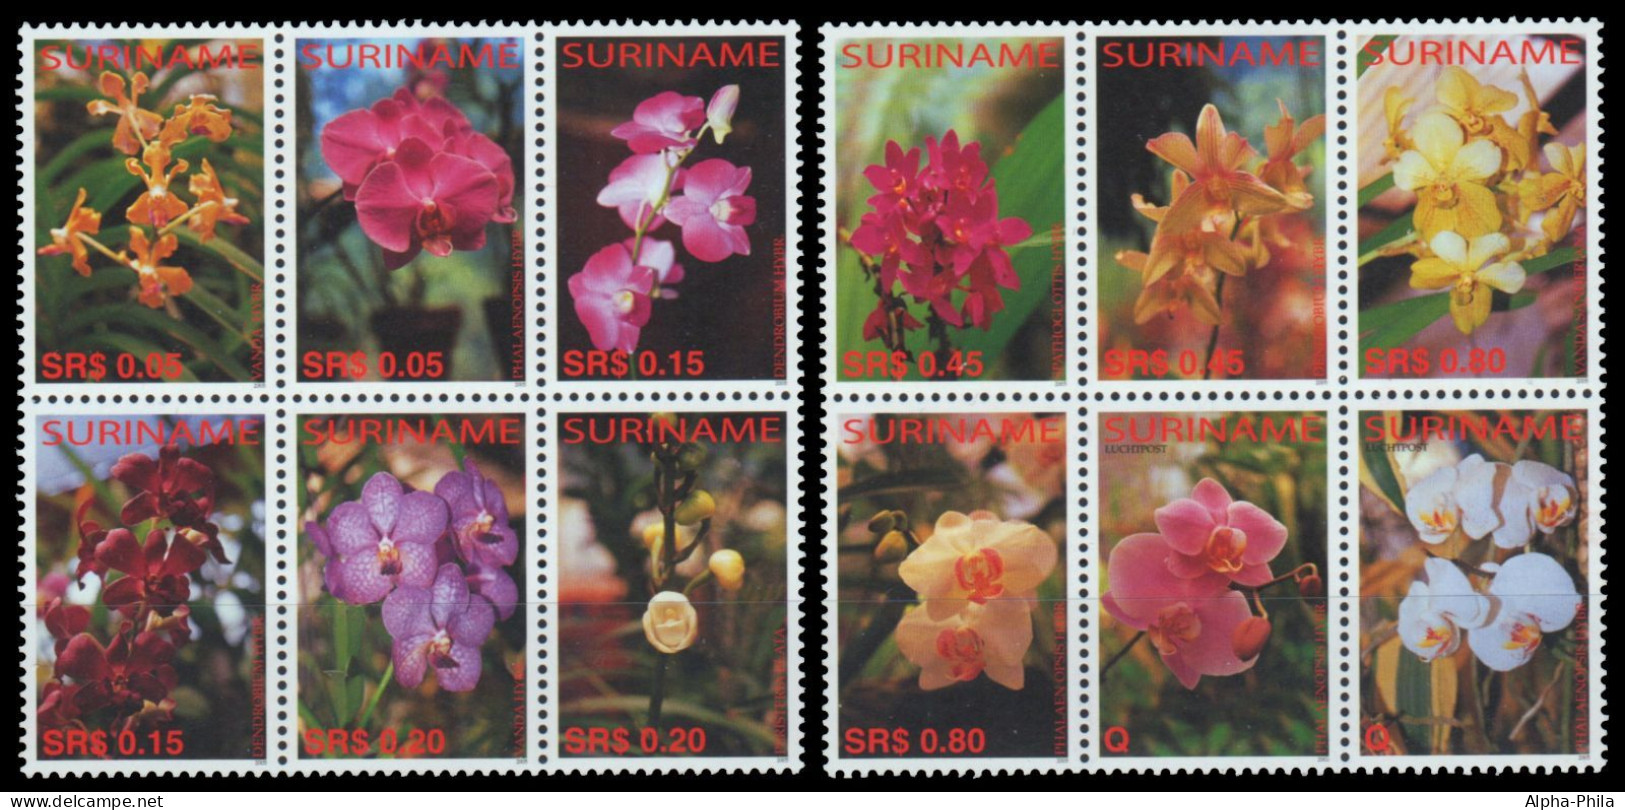 Surinam 2005 - Mi-Nr. 1995-2006 ** - MNH - Orchideen / Orchids - Suriname